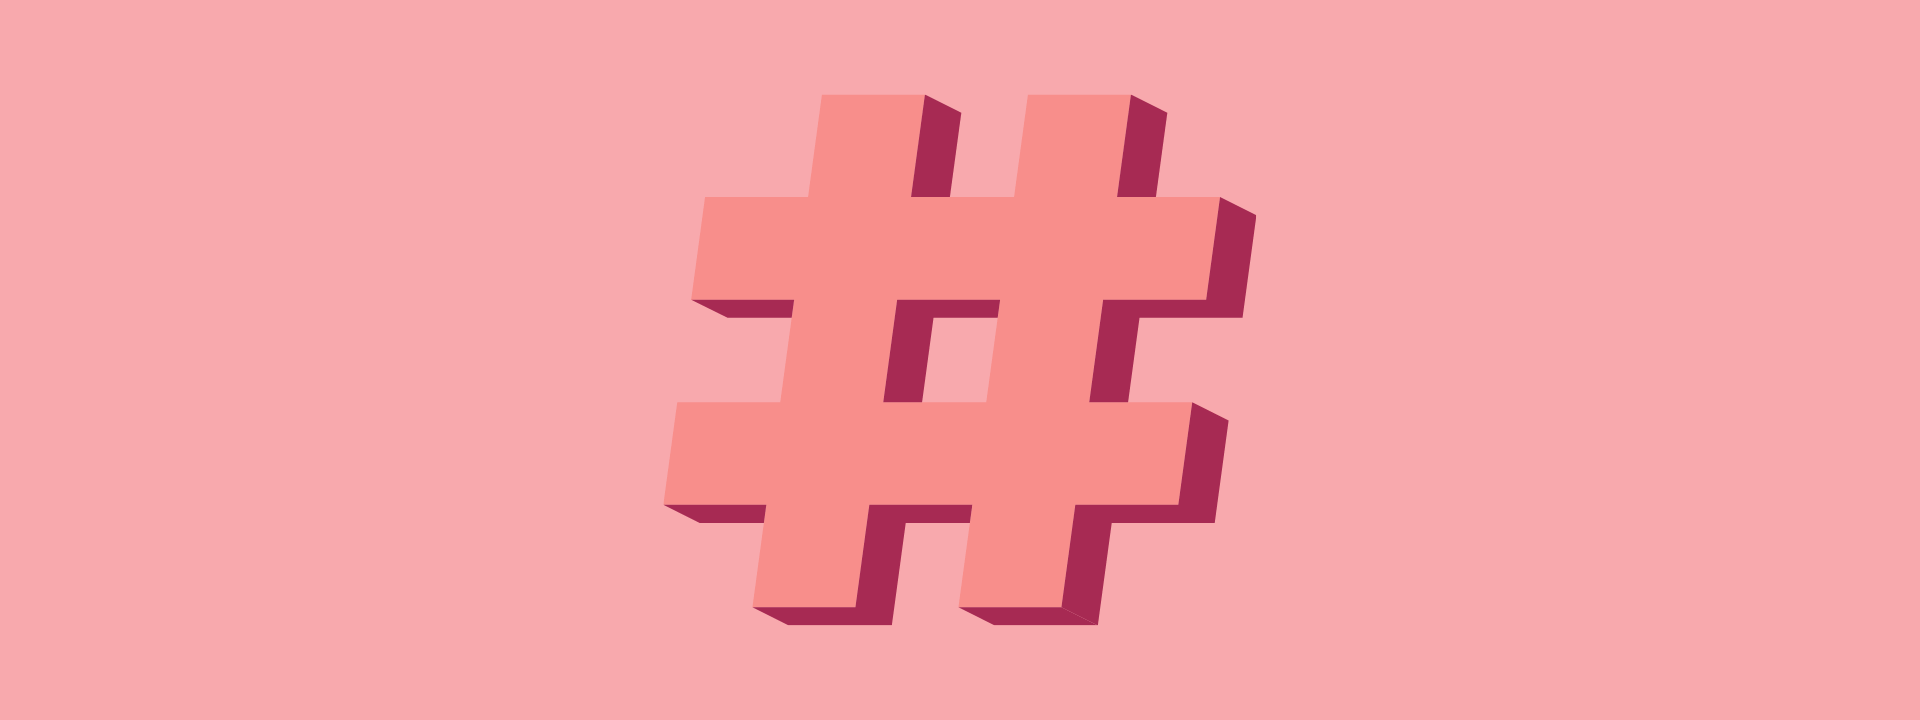 praćenje hashtagova na instagramu je izuzetno bitno za to kako radi instagram algoritam